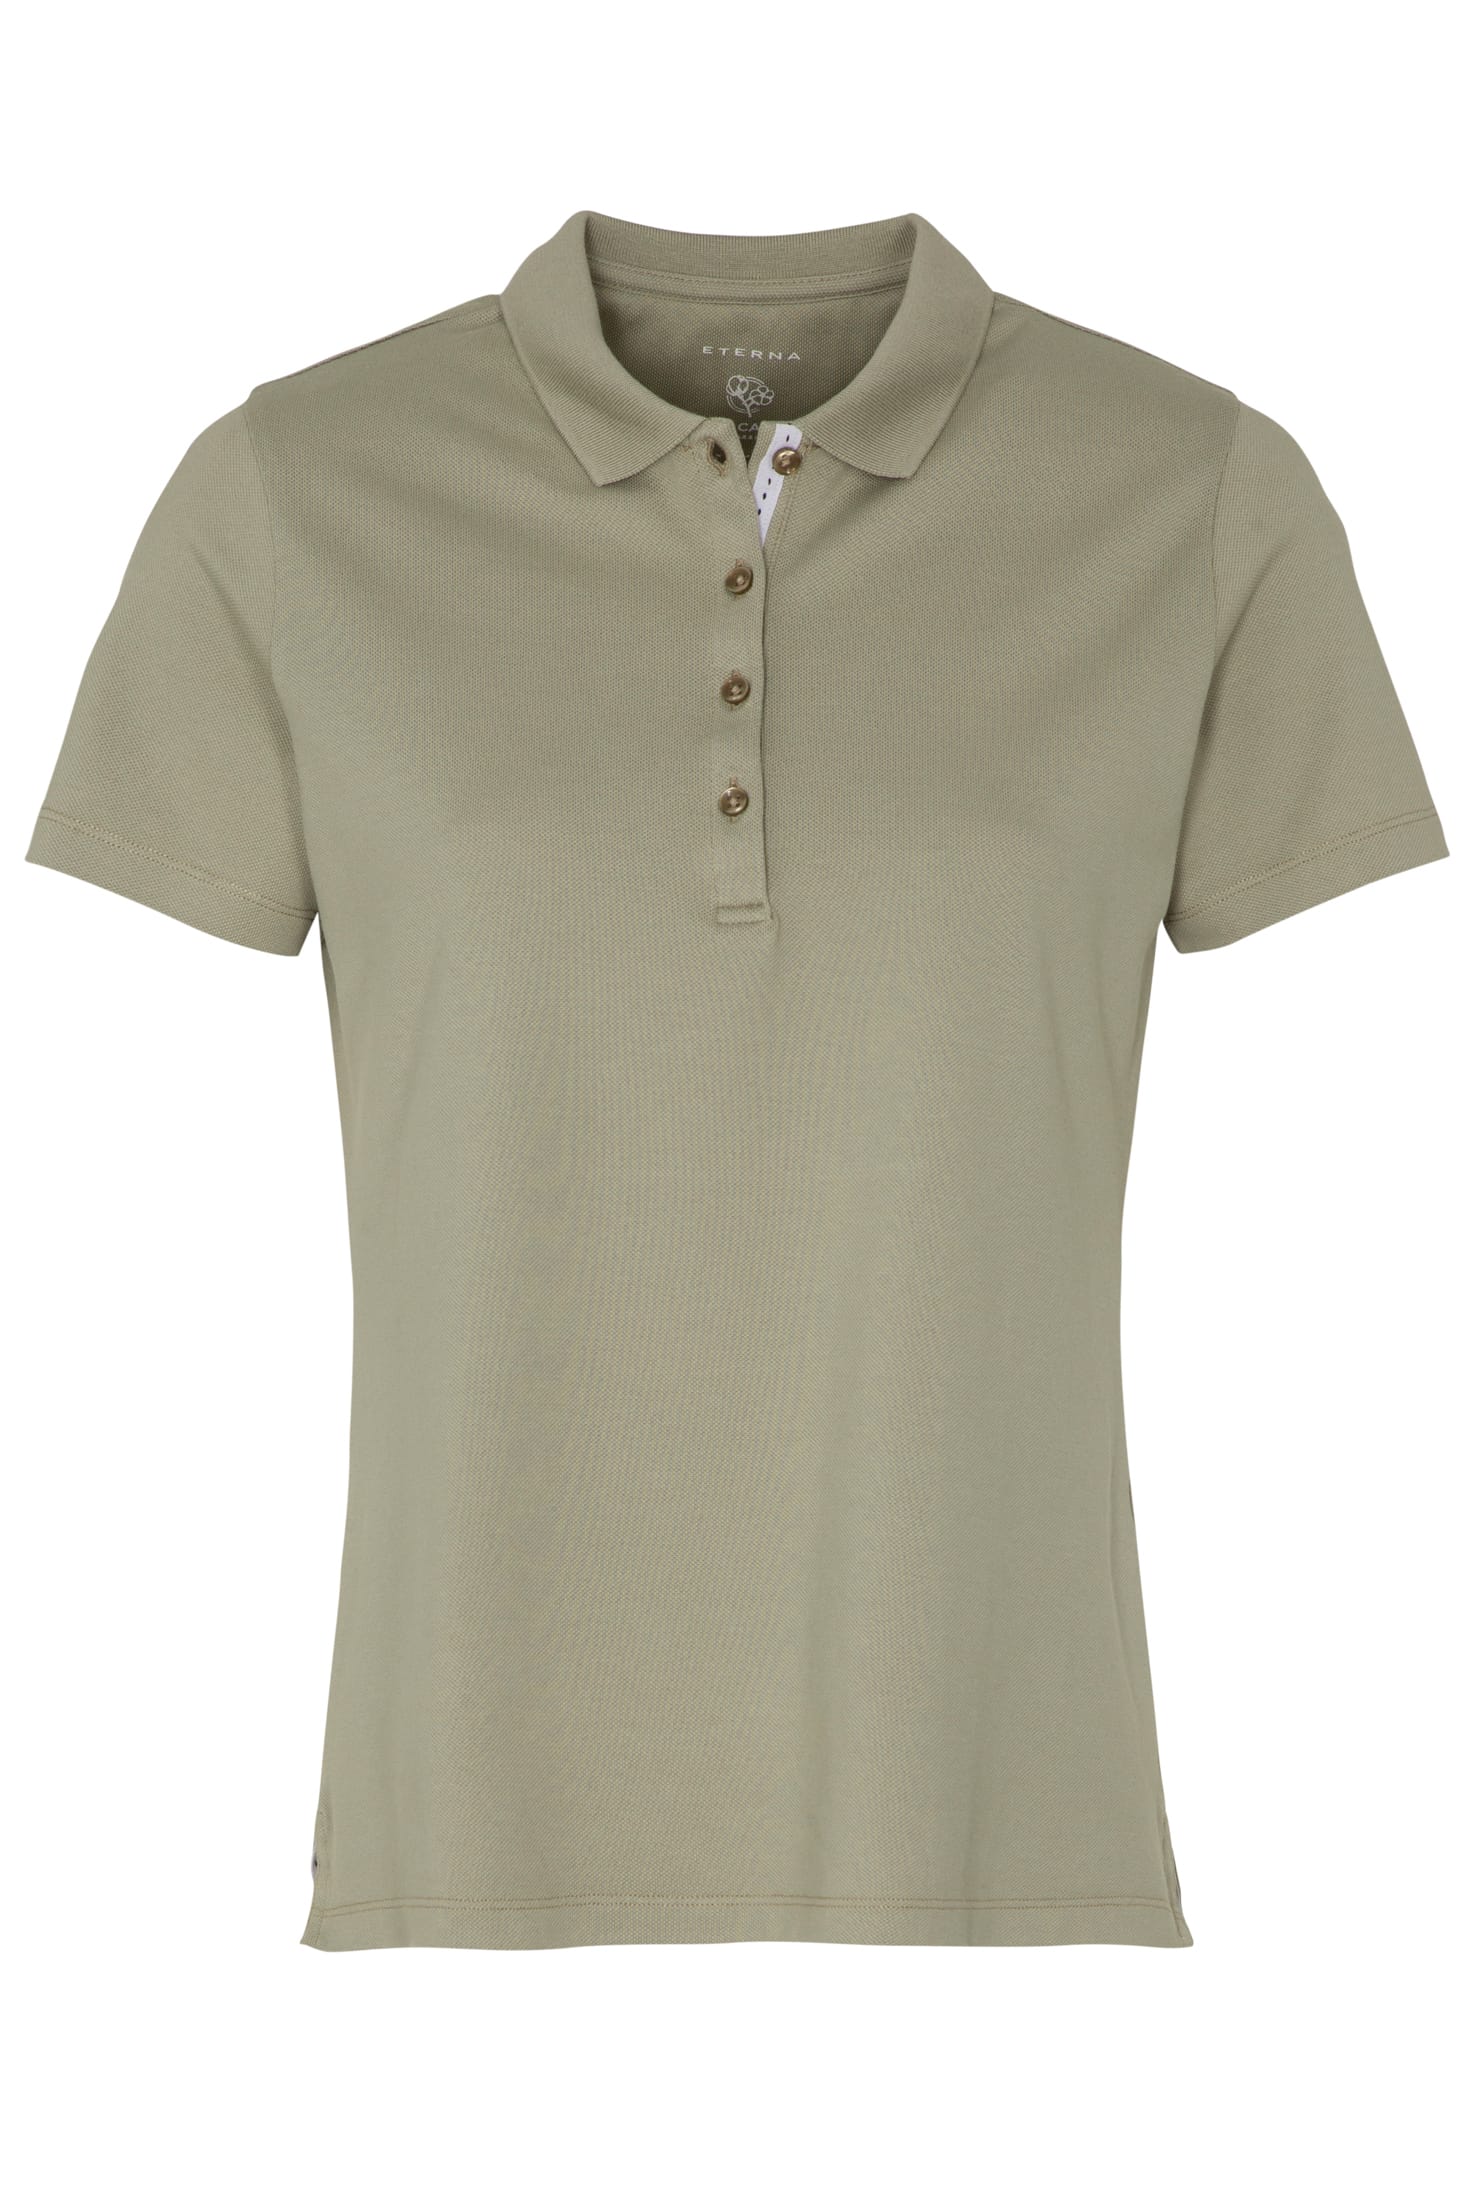 ETERNA CLASSIC FIT Poloshirt | Bekleidung Eterna pique Damen | 5535-41-H530 Poloshirts | Jeans-Manufaktur hellgrün 